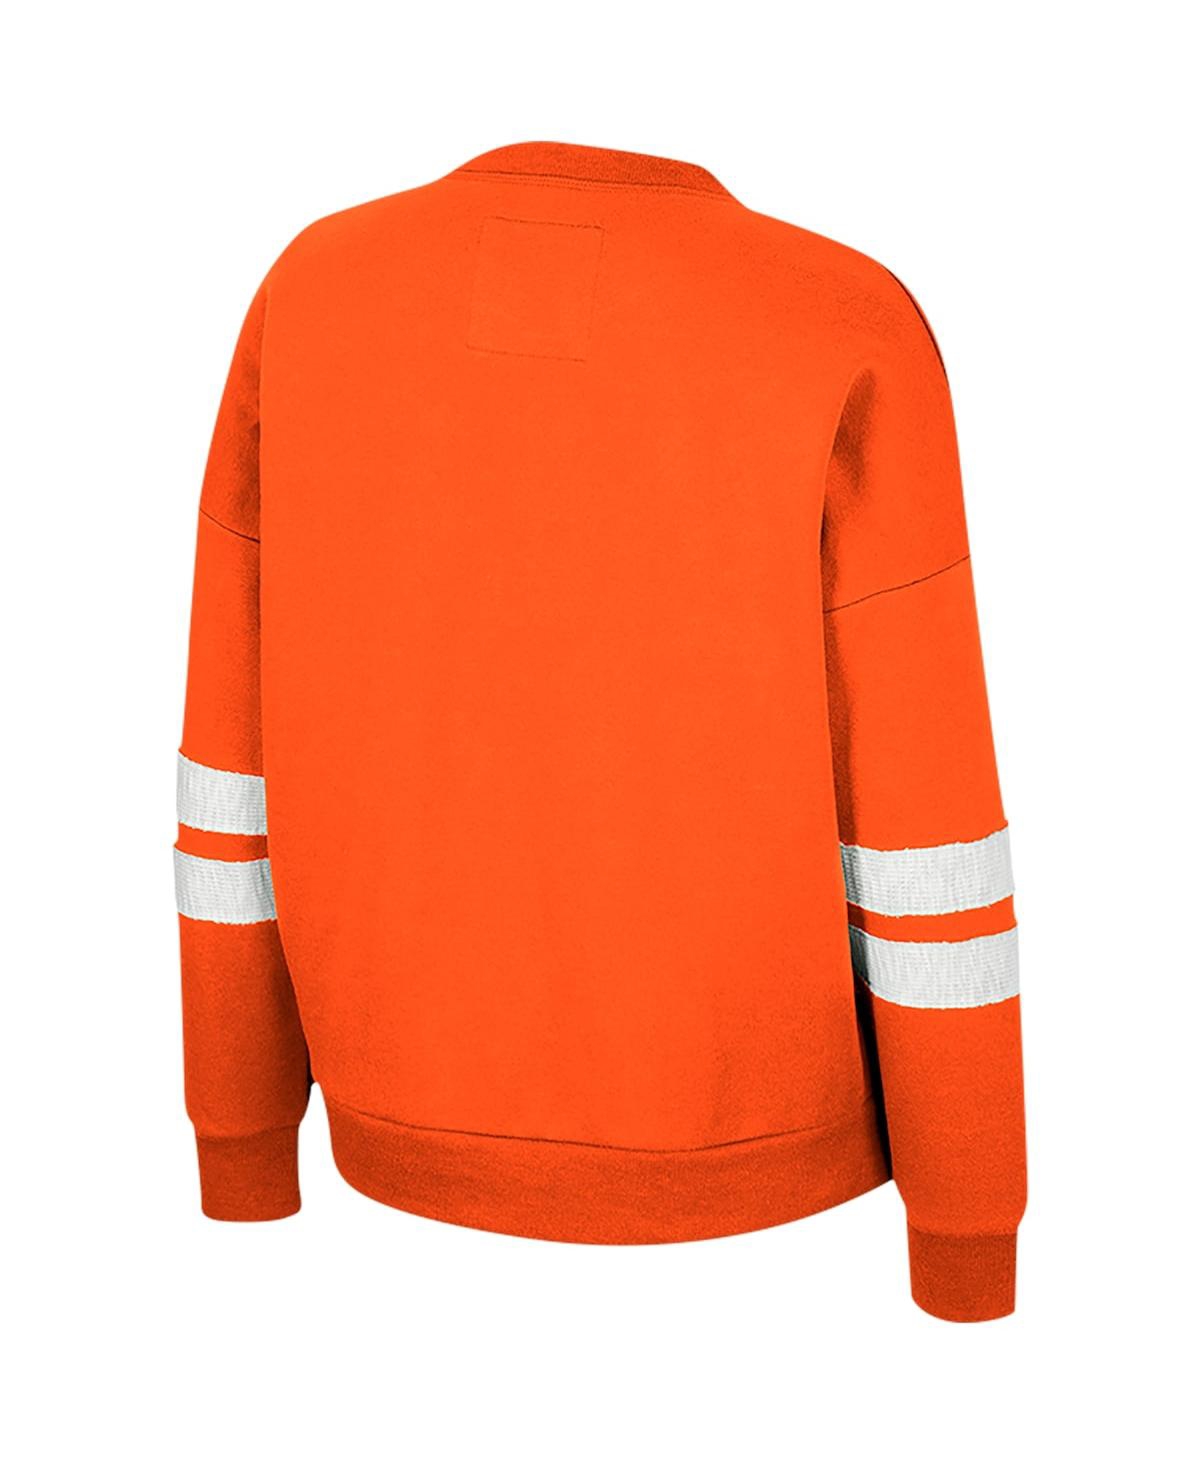 Shop Colosseum Women's  Orange Distressed Miami Hurricanes Perfect Date Notch Neck Pullover Sweatshirt